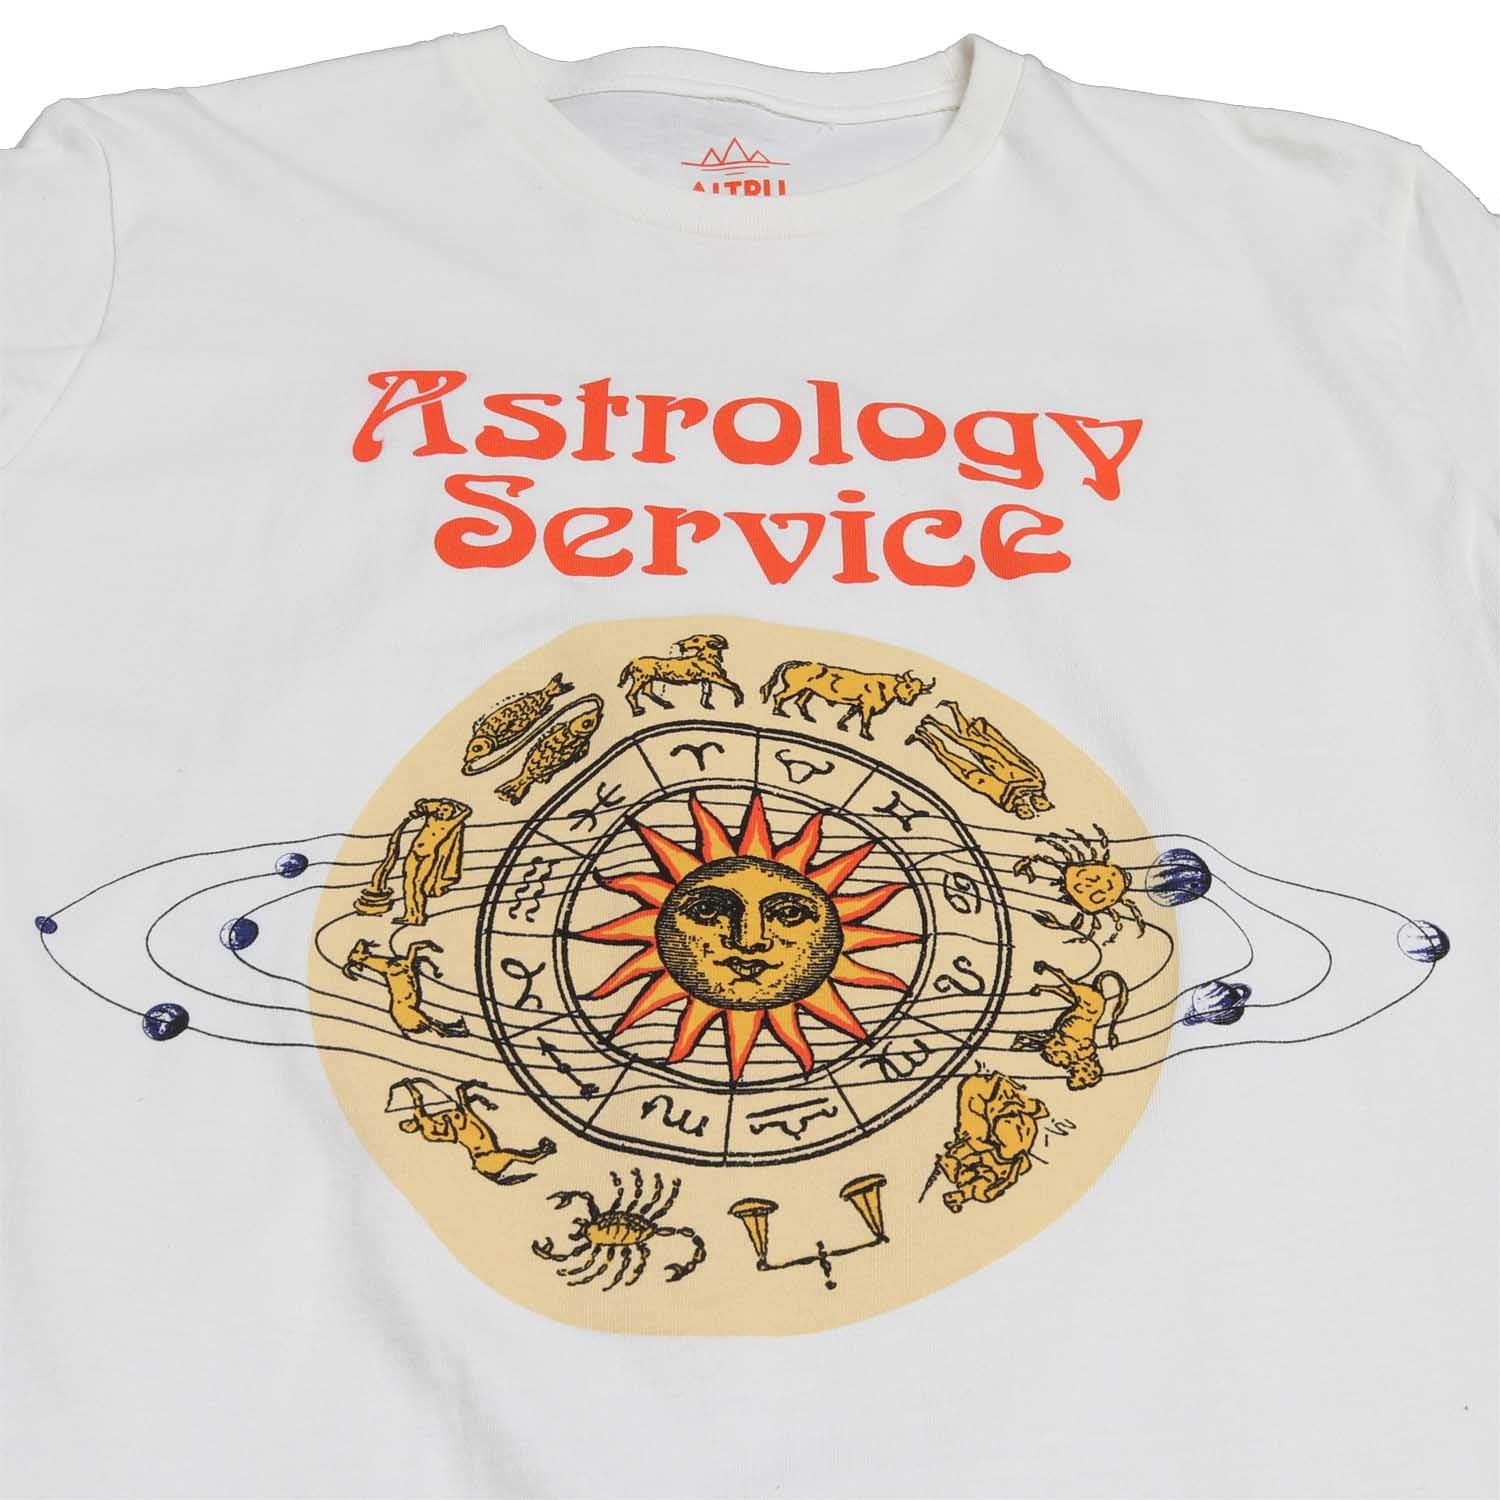 ASTROLOGY SERVICE TEE